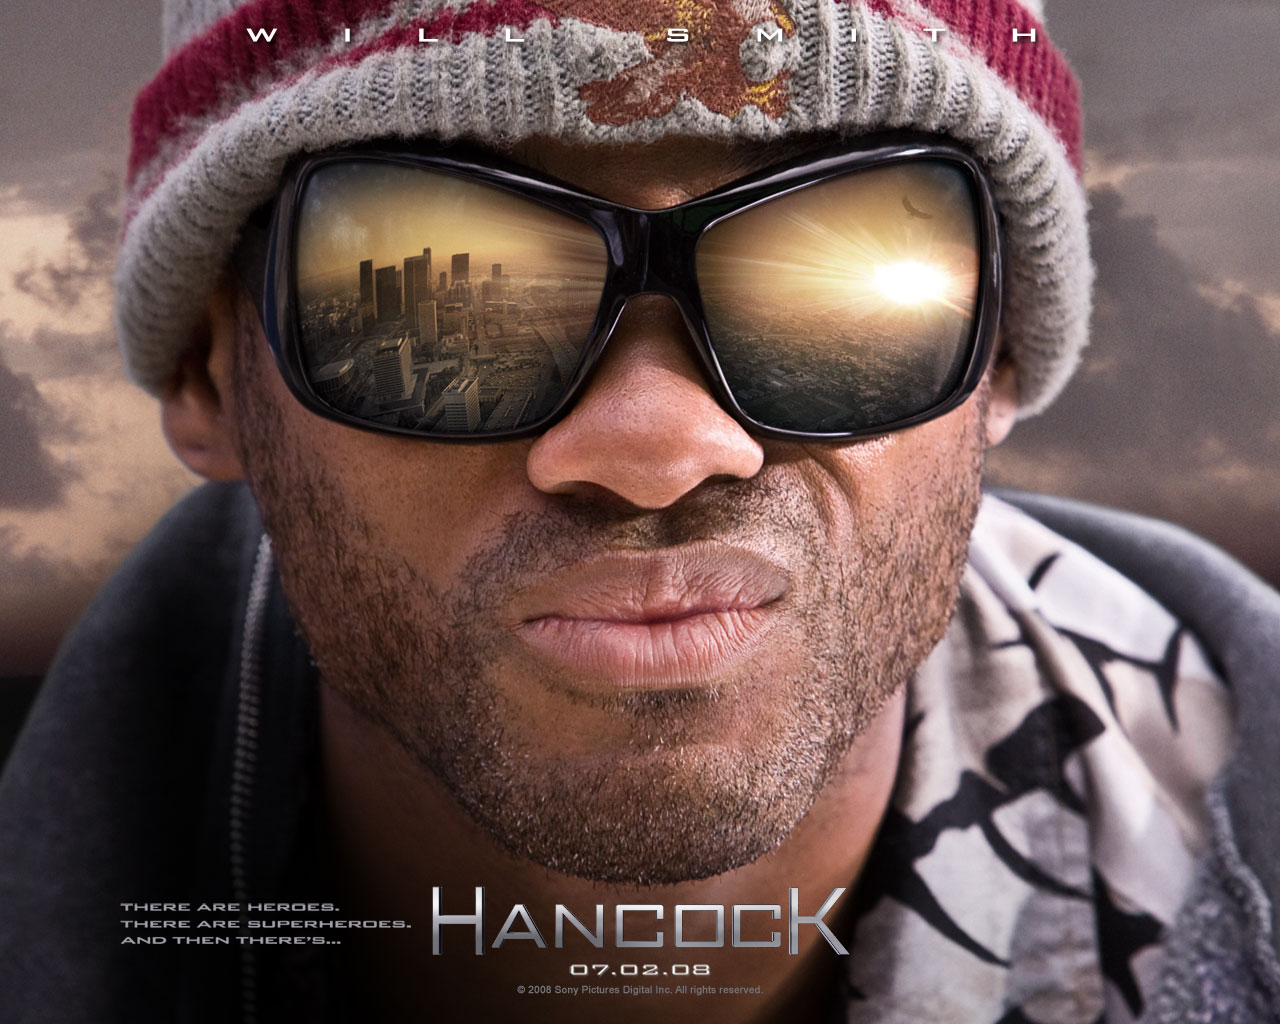 Hancock #20